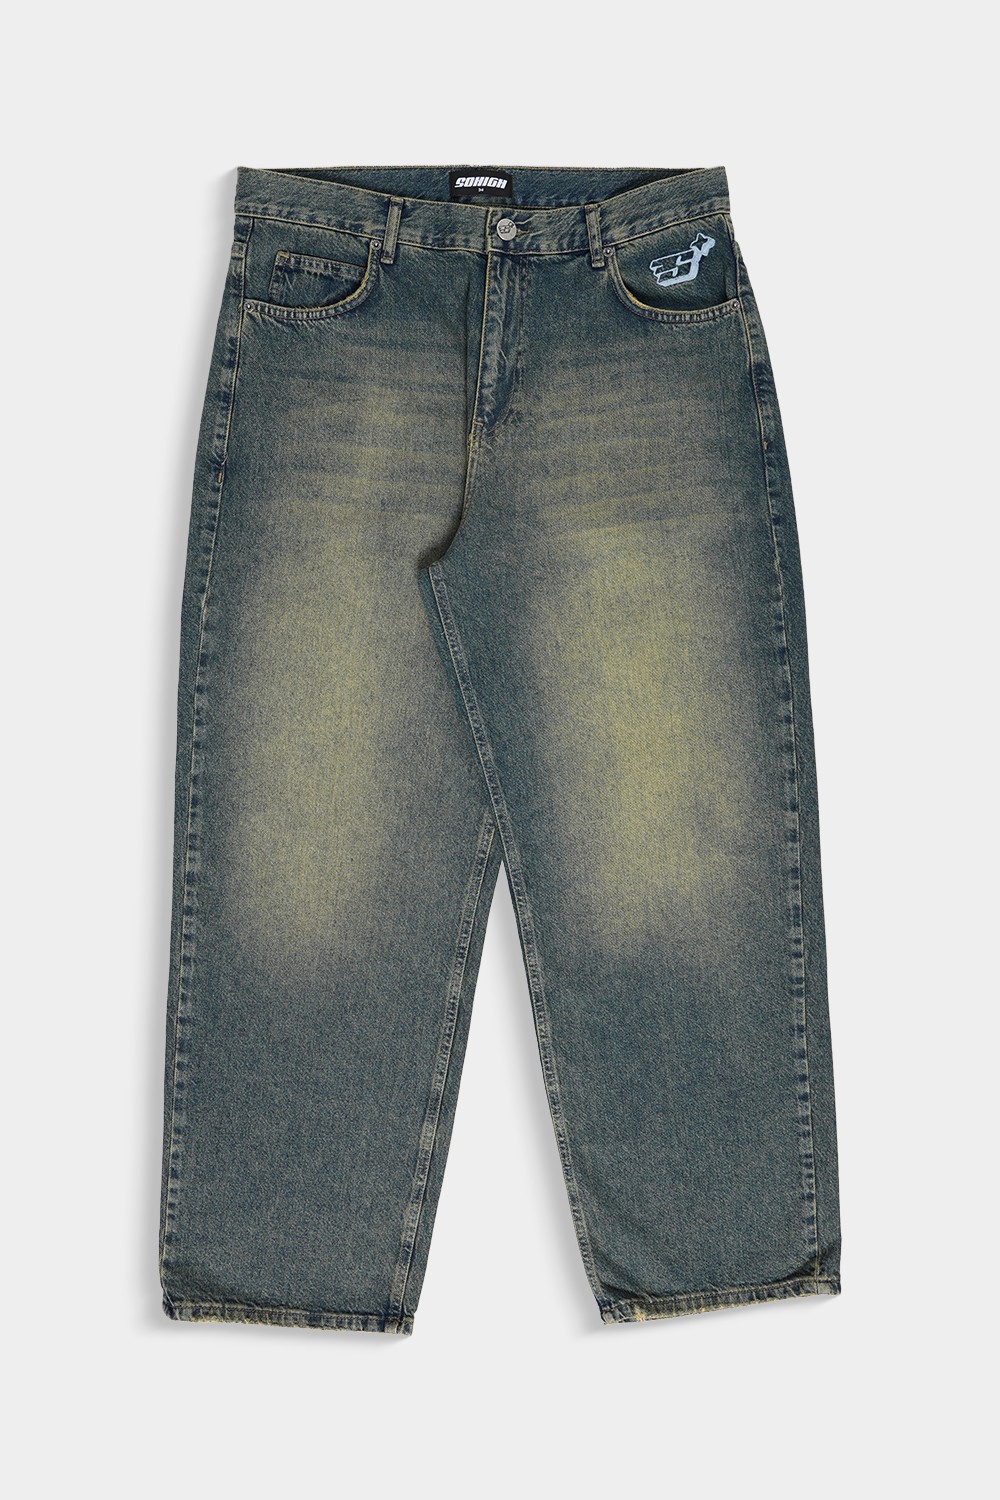 Baggy Skate Jeans - Light Green Tint (SHBS-10)